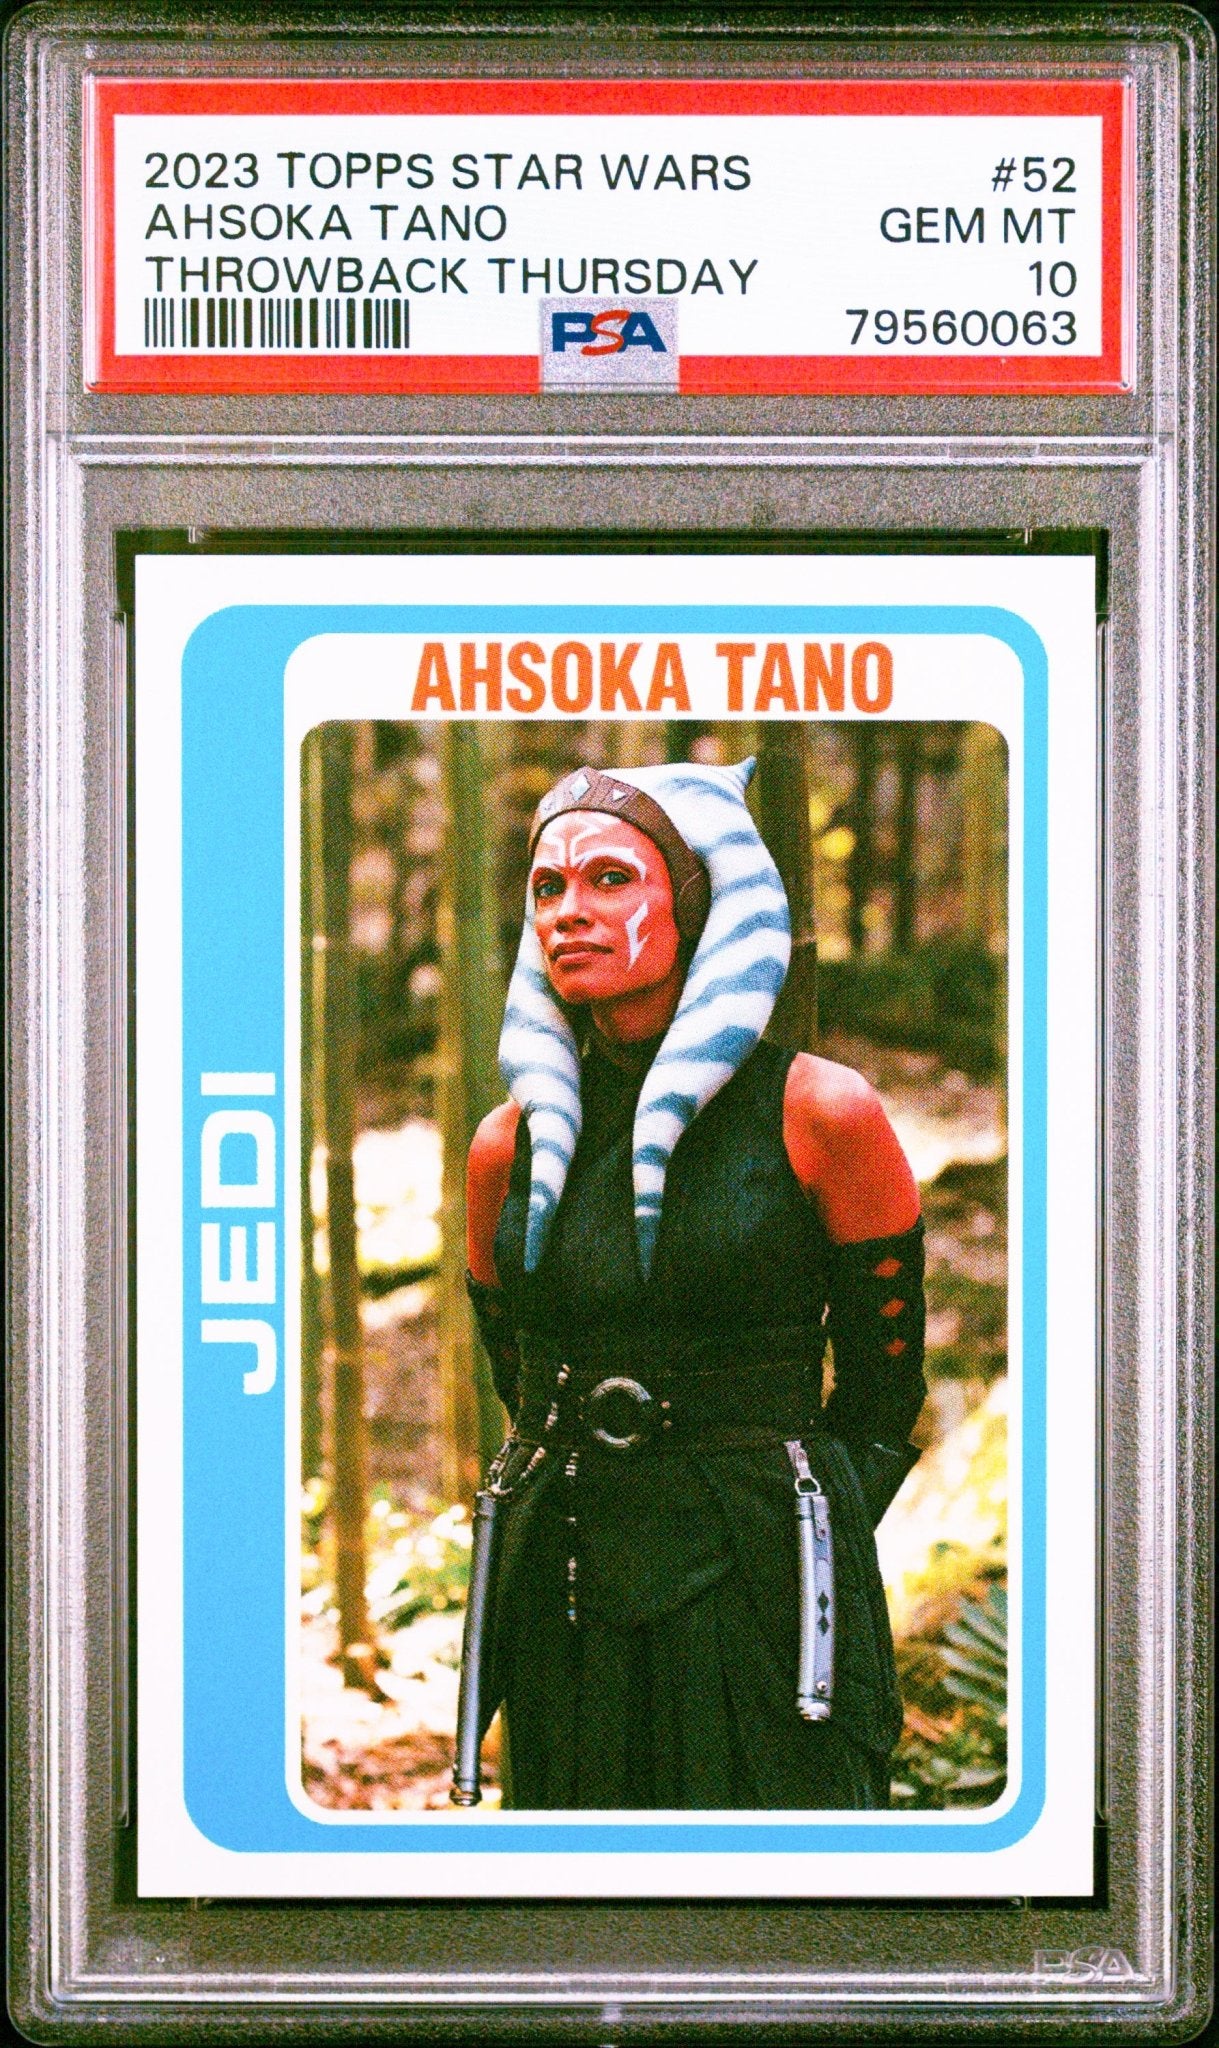 AHSOKA TANO PSA 10 2023 Topps Star Wars Throwback Thursday TBT #52 C5 Star Wars Base Graded Cards - Hobby Gems